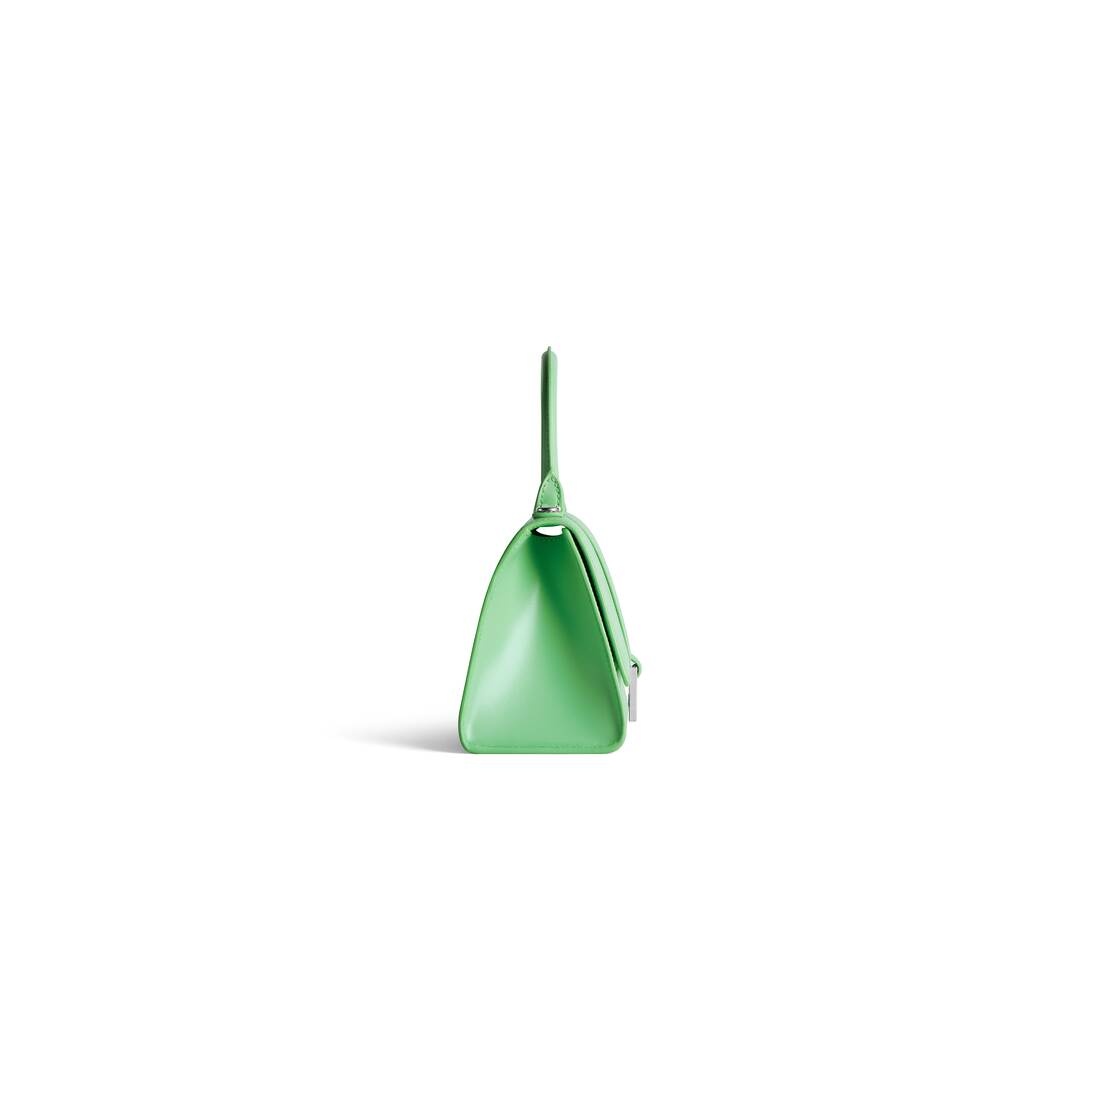 Women's Hourglass Small Handbag Box in Light Green - 3